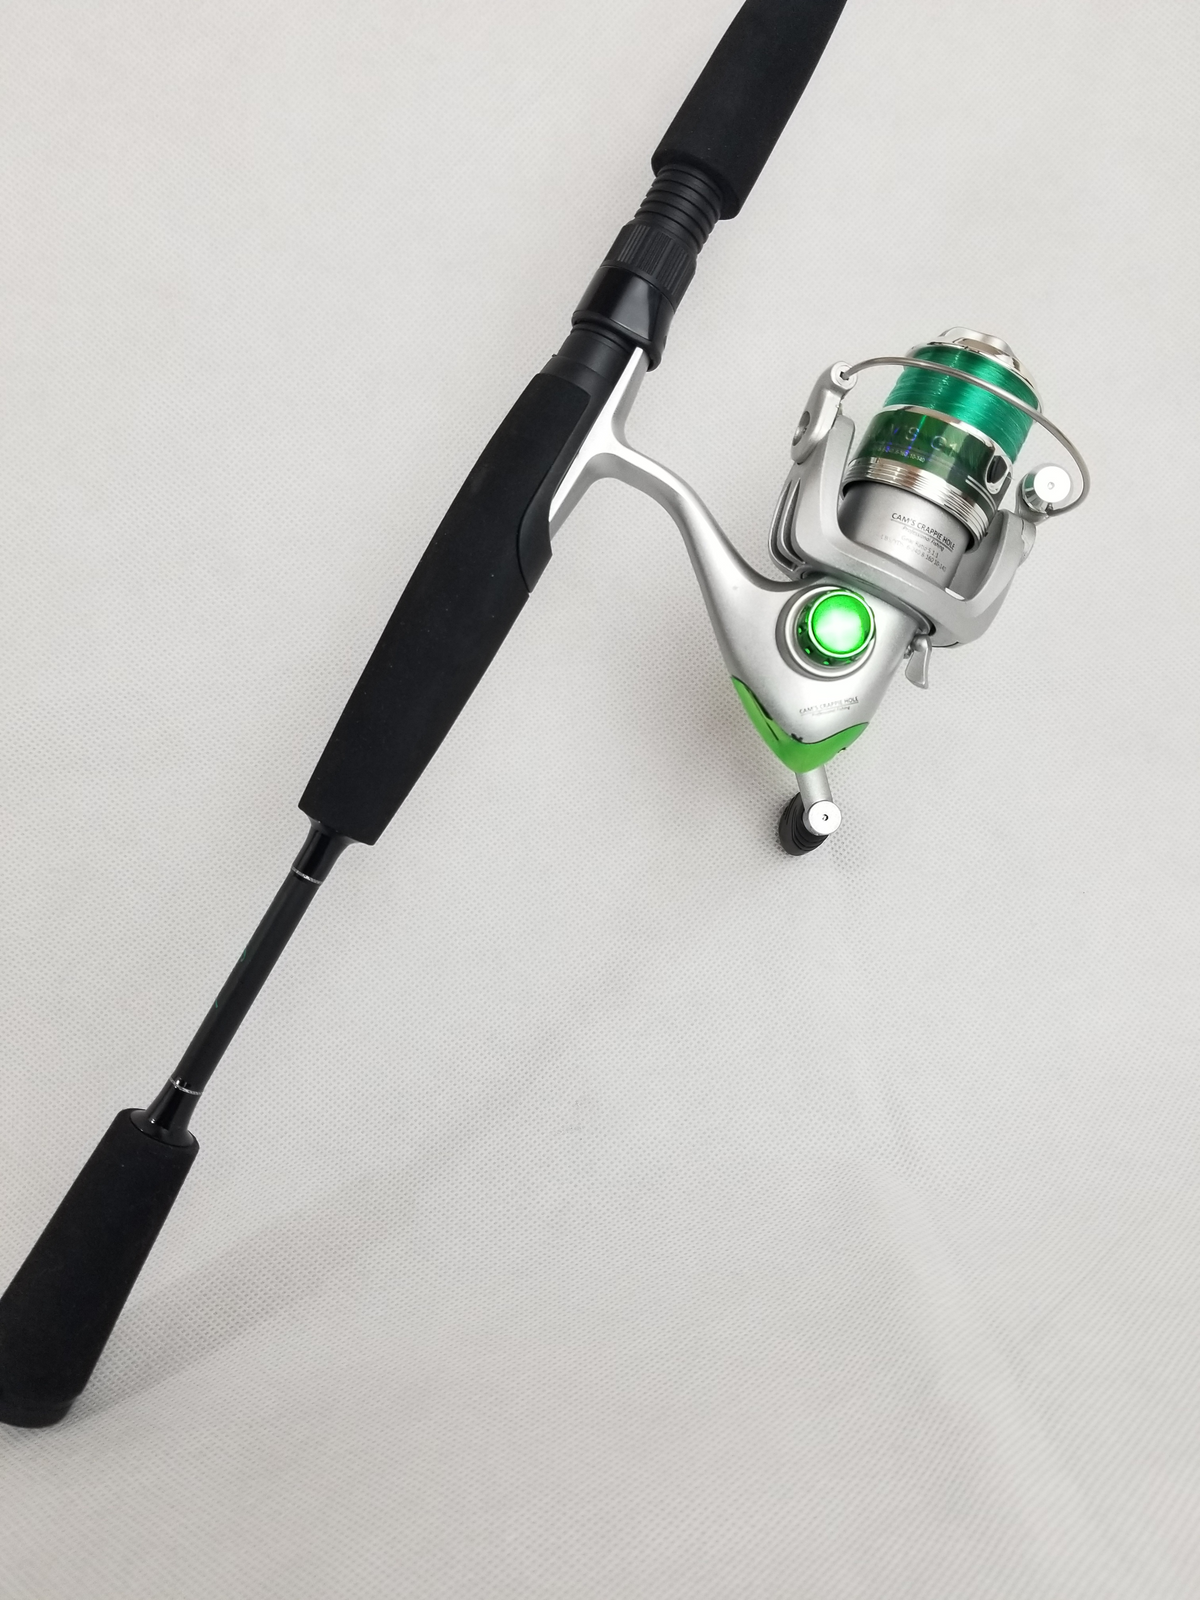 Pink 6'6 Okuma Steeler XP 2 Piece Fishing Rod and Reel Combo